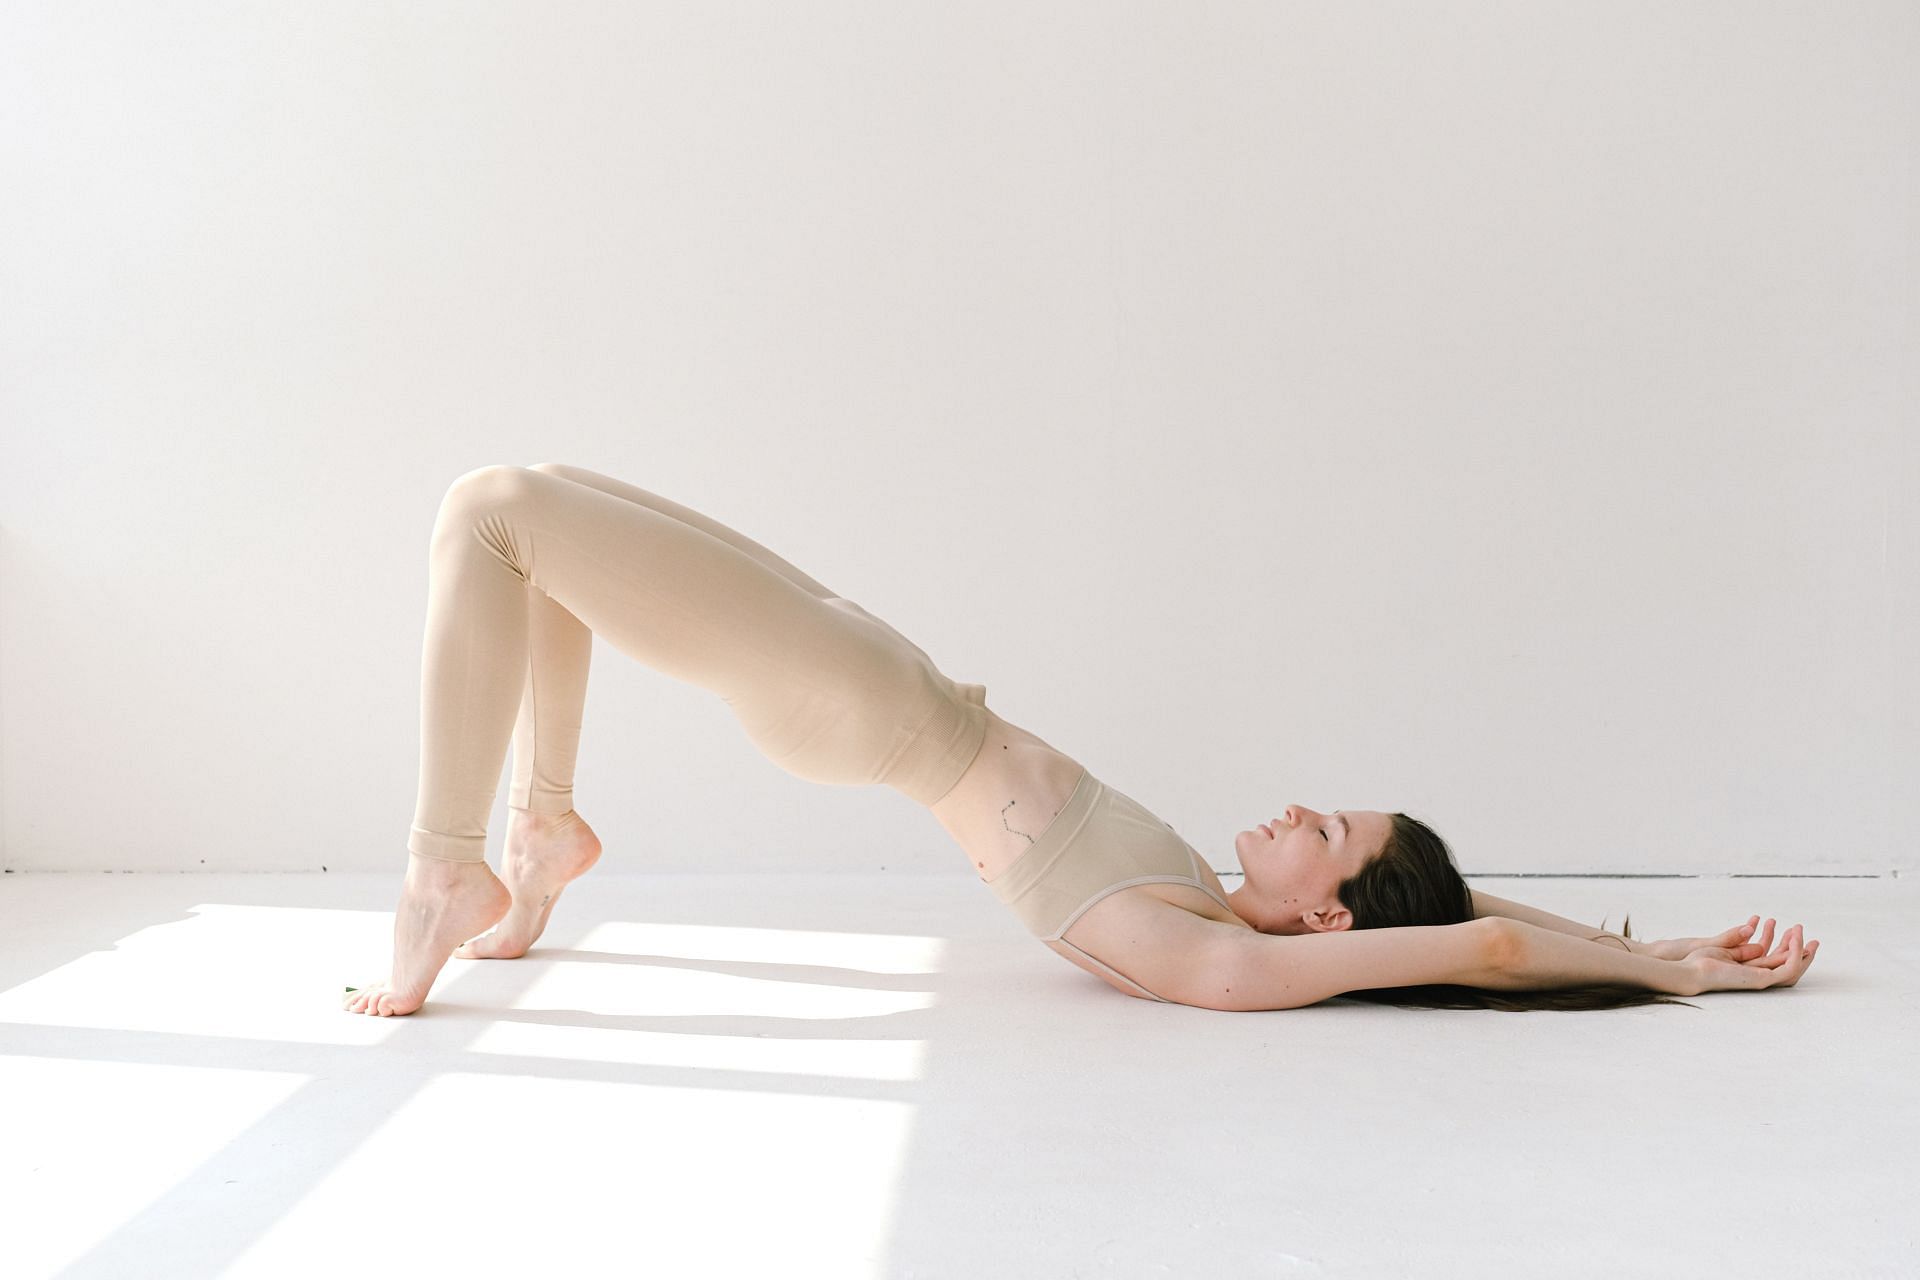 Benefits of Bikram Yoga Postures to Keep You Fit